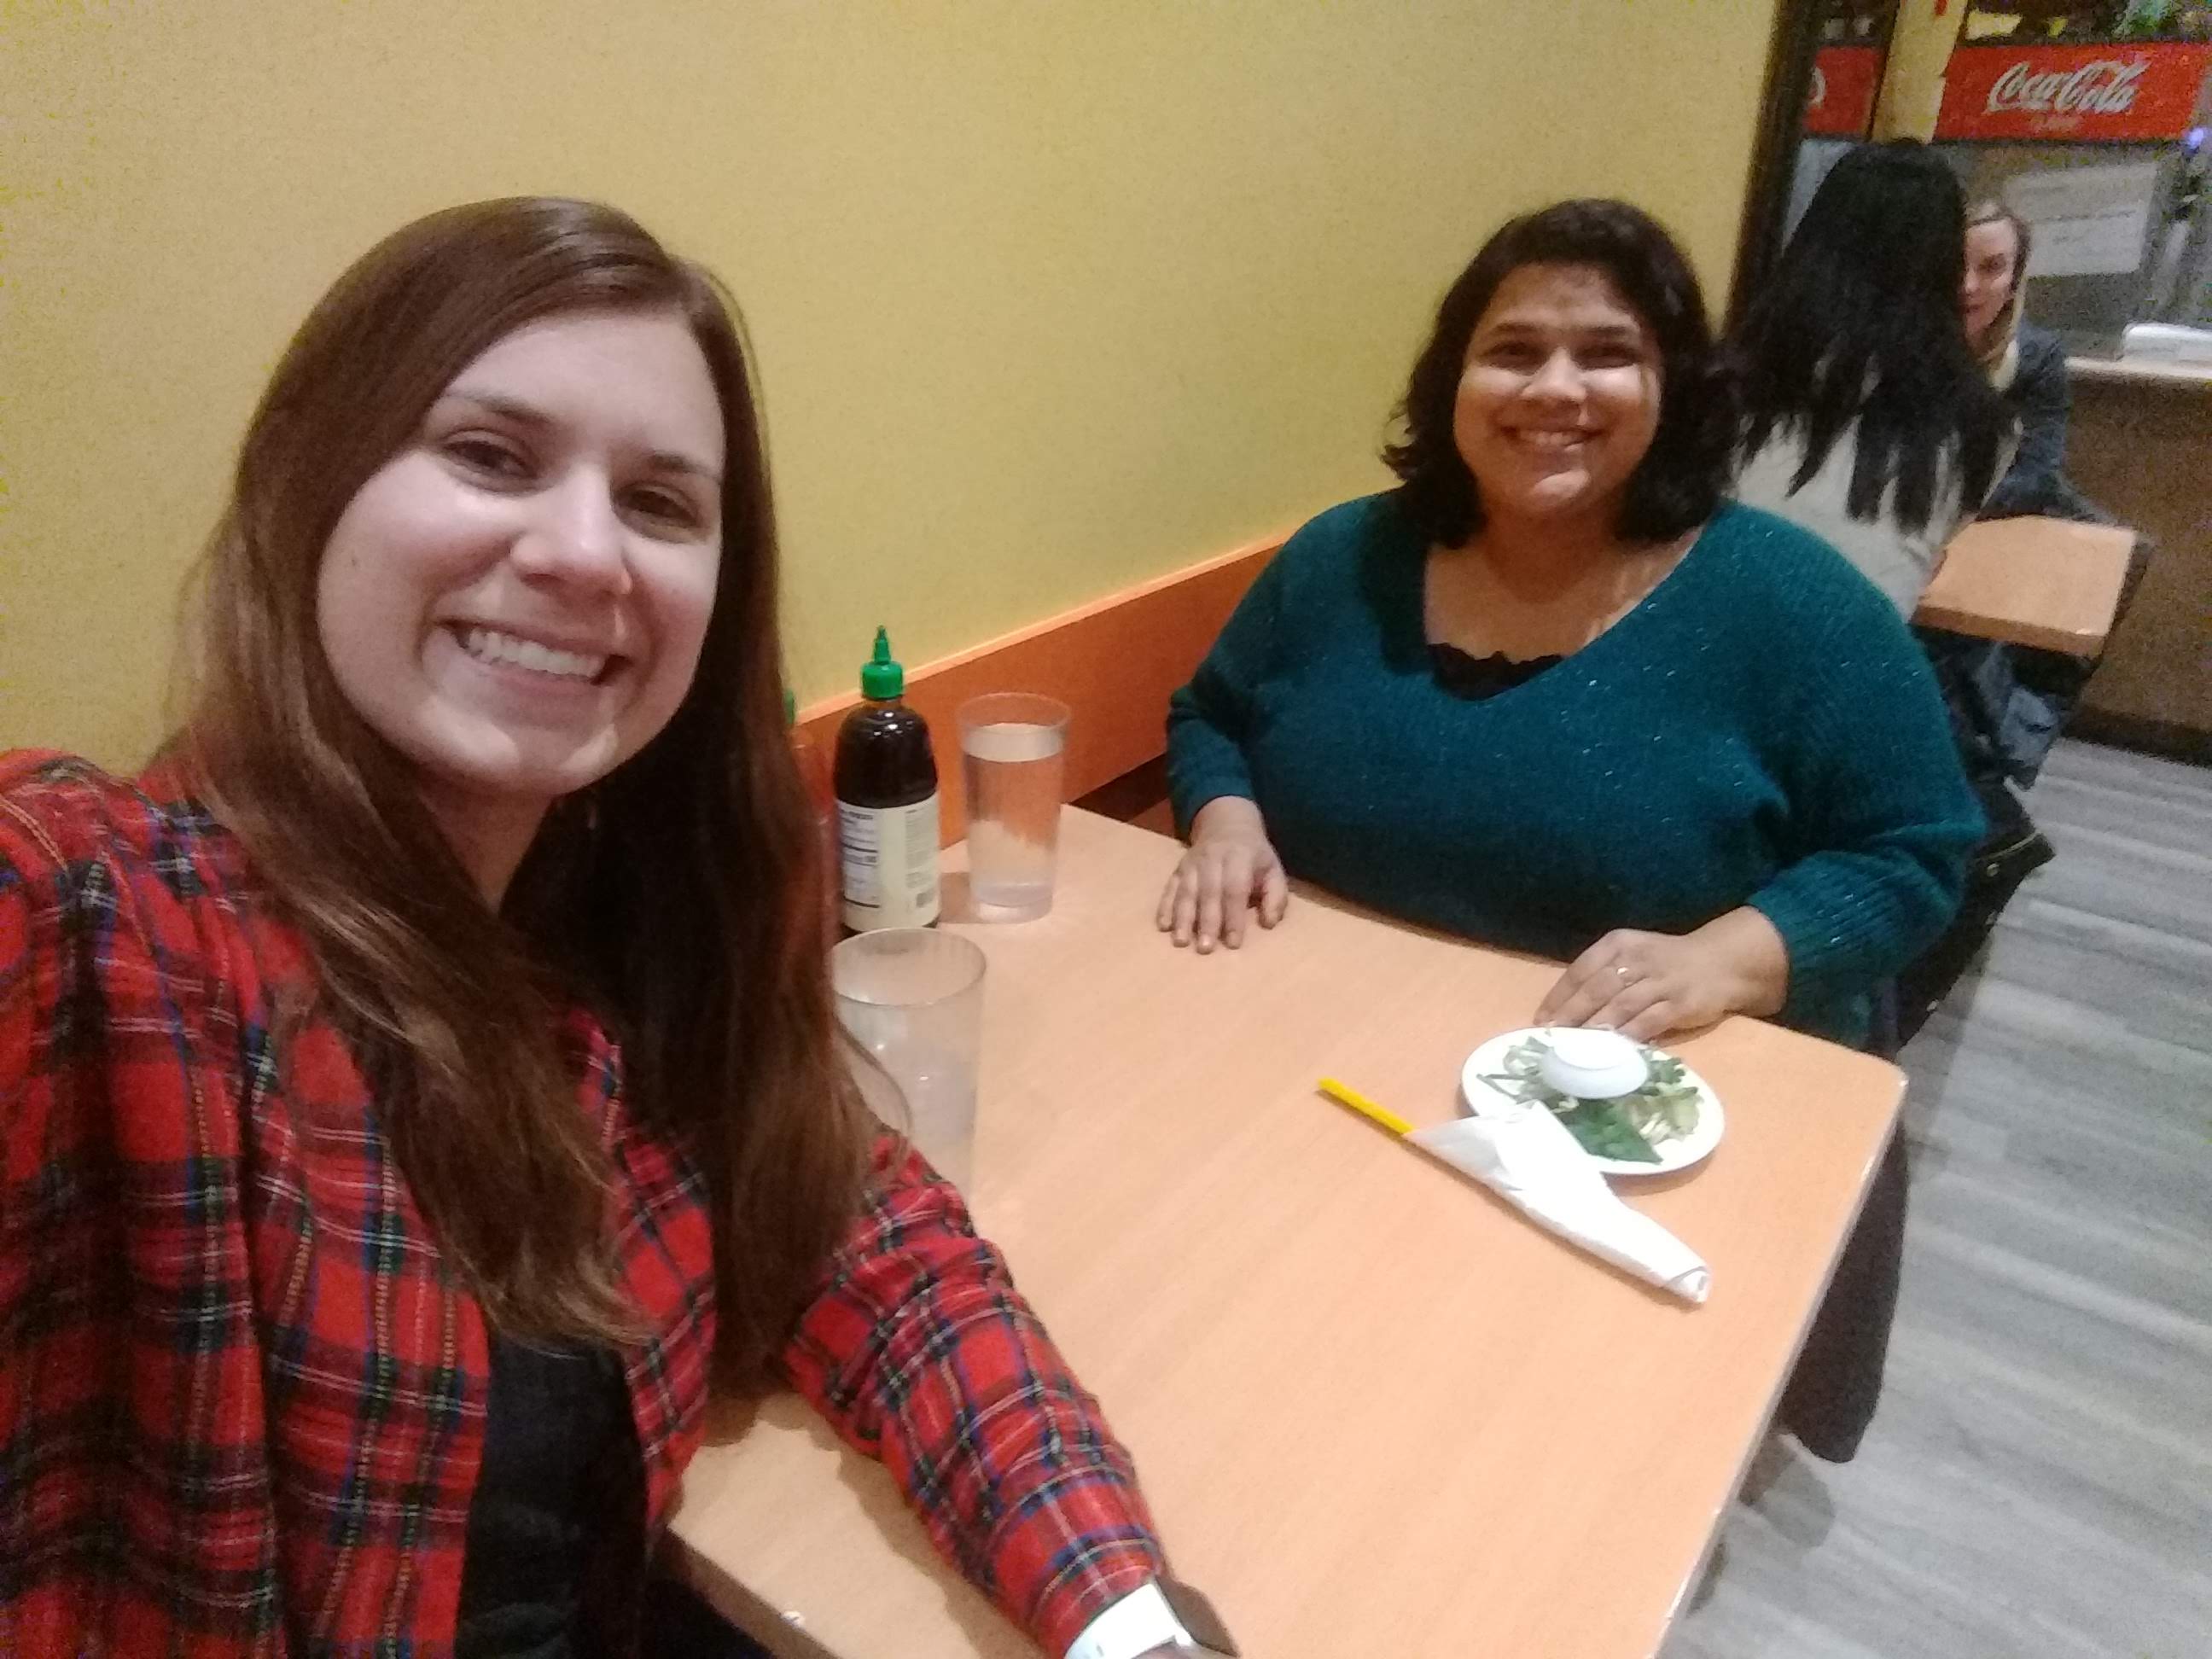 Sharleen and Anupriya celebrating at a pho restaurant.